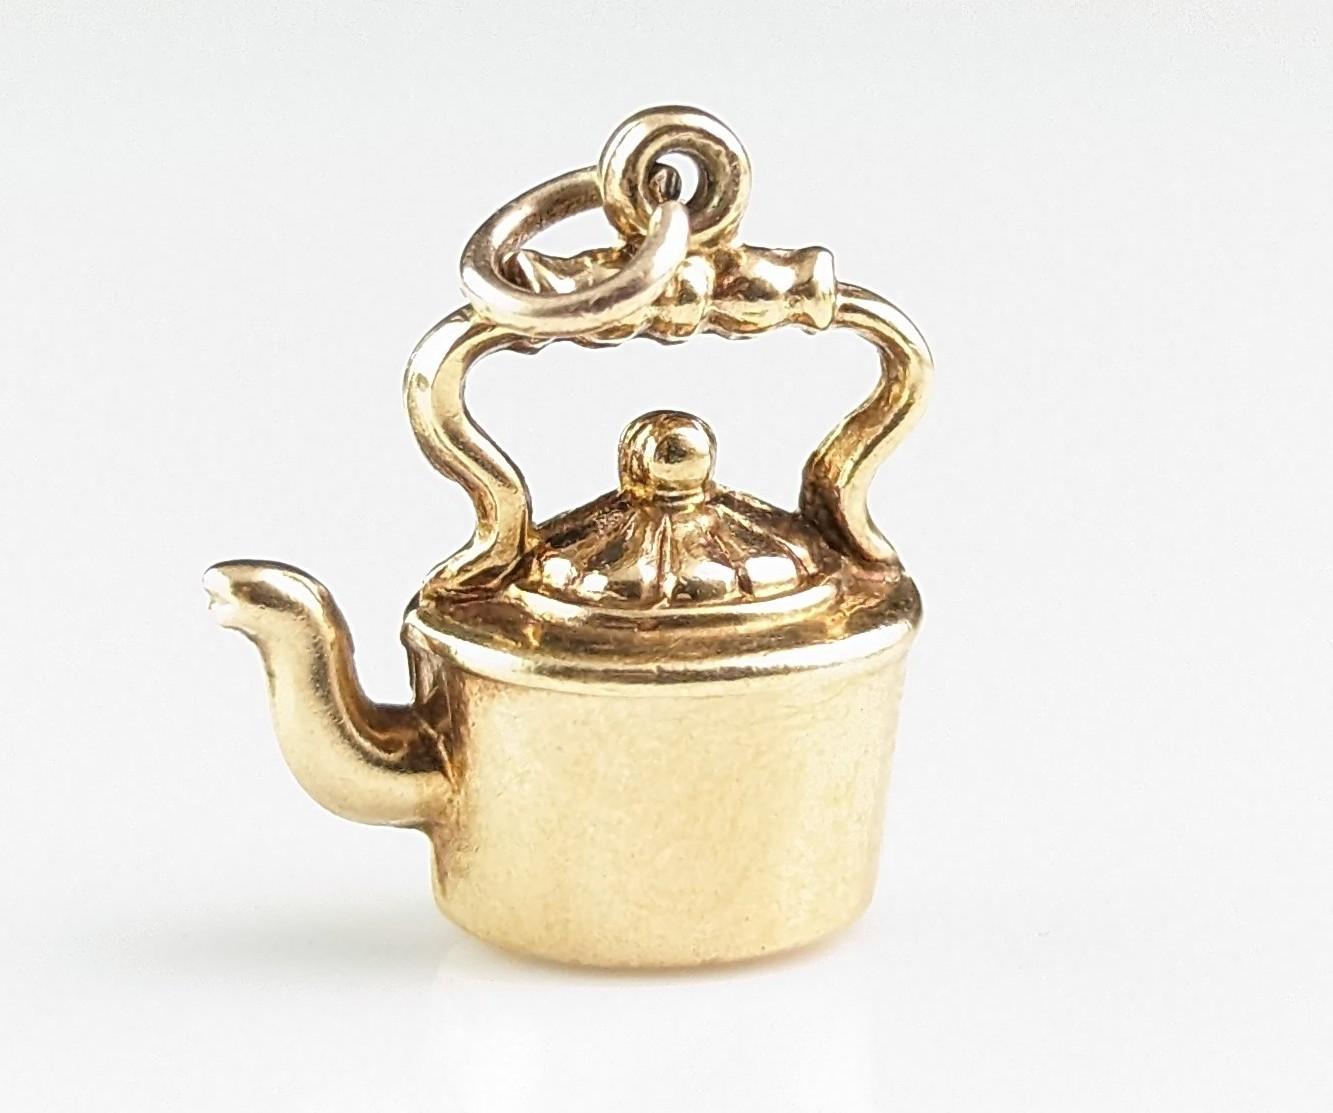 Vintage 9k gold kettle Charm, old Victorian style kettle 3